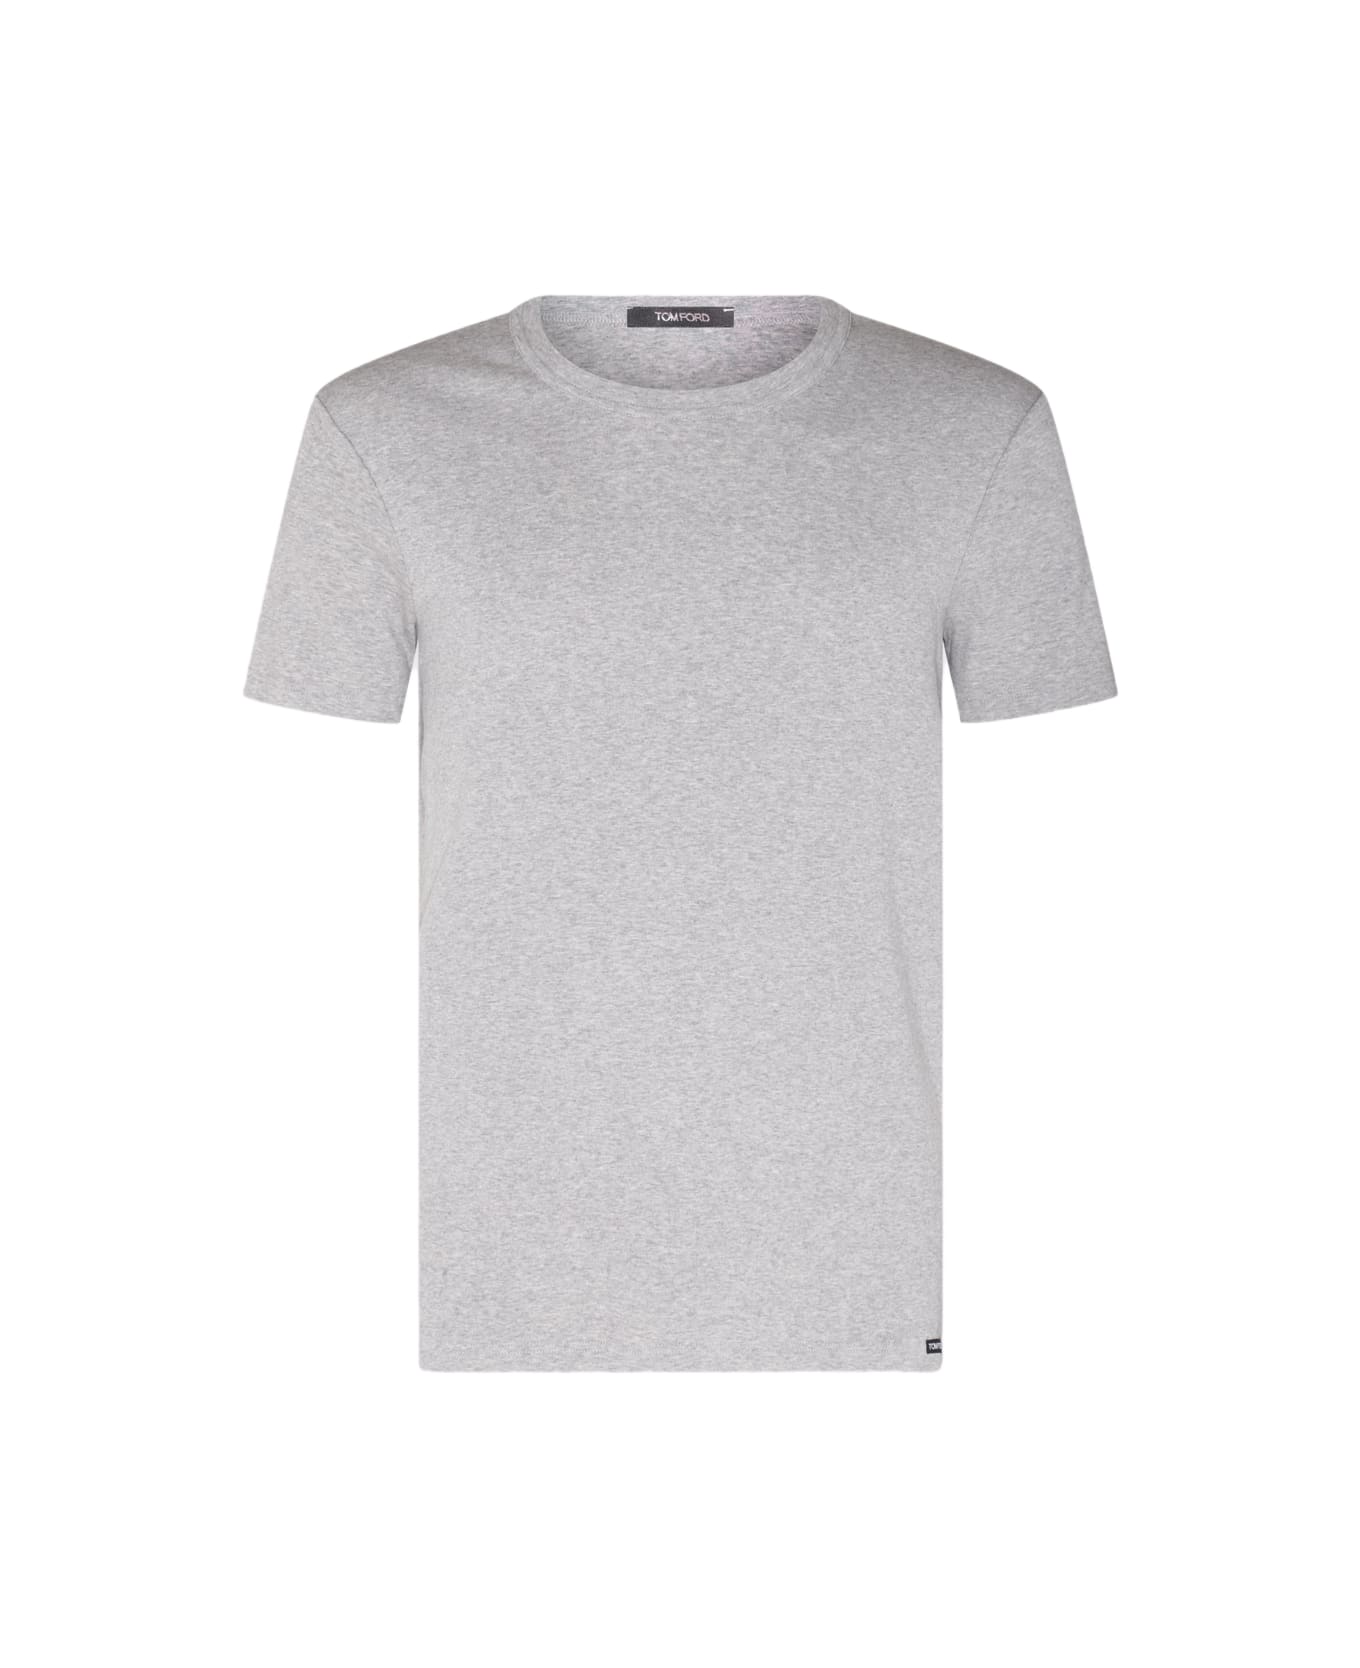 Tom Ford Grey Cotton Blend T-shirt - Grey